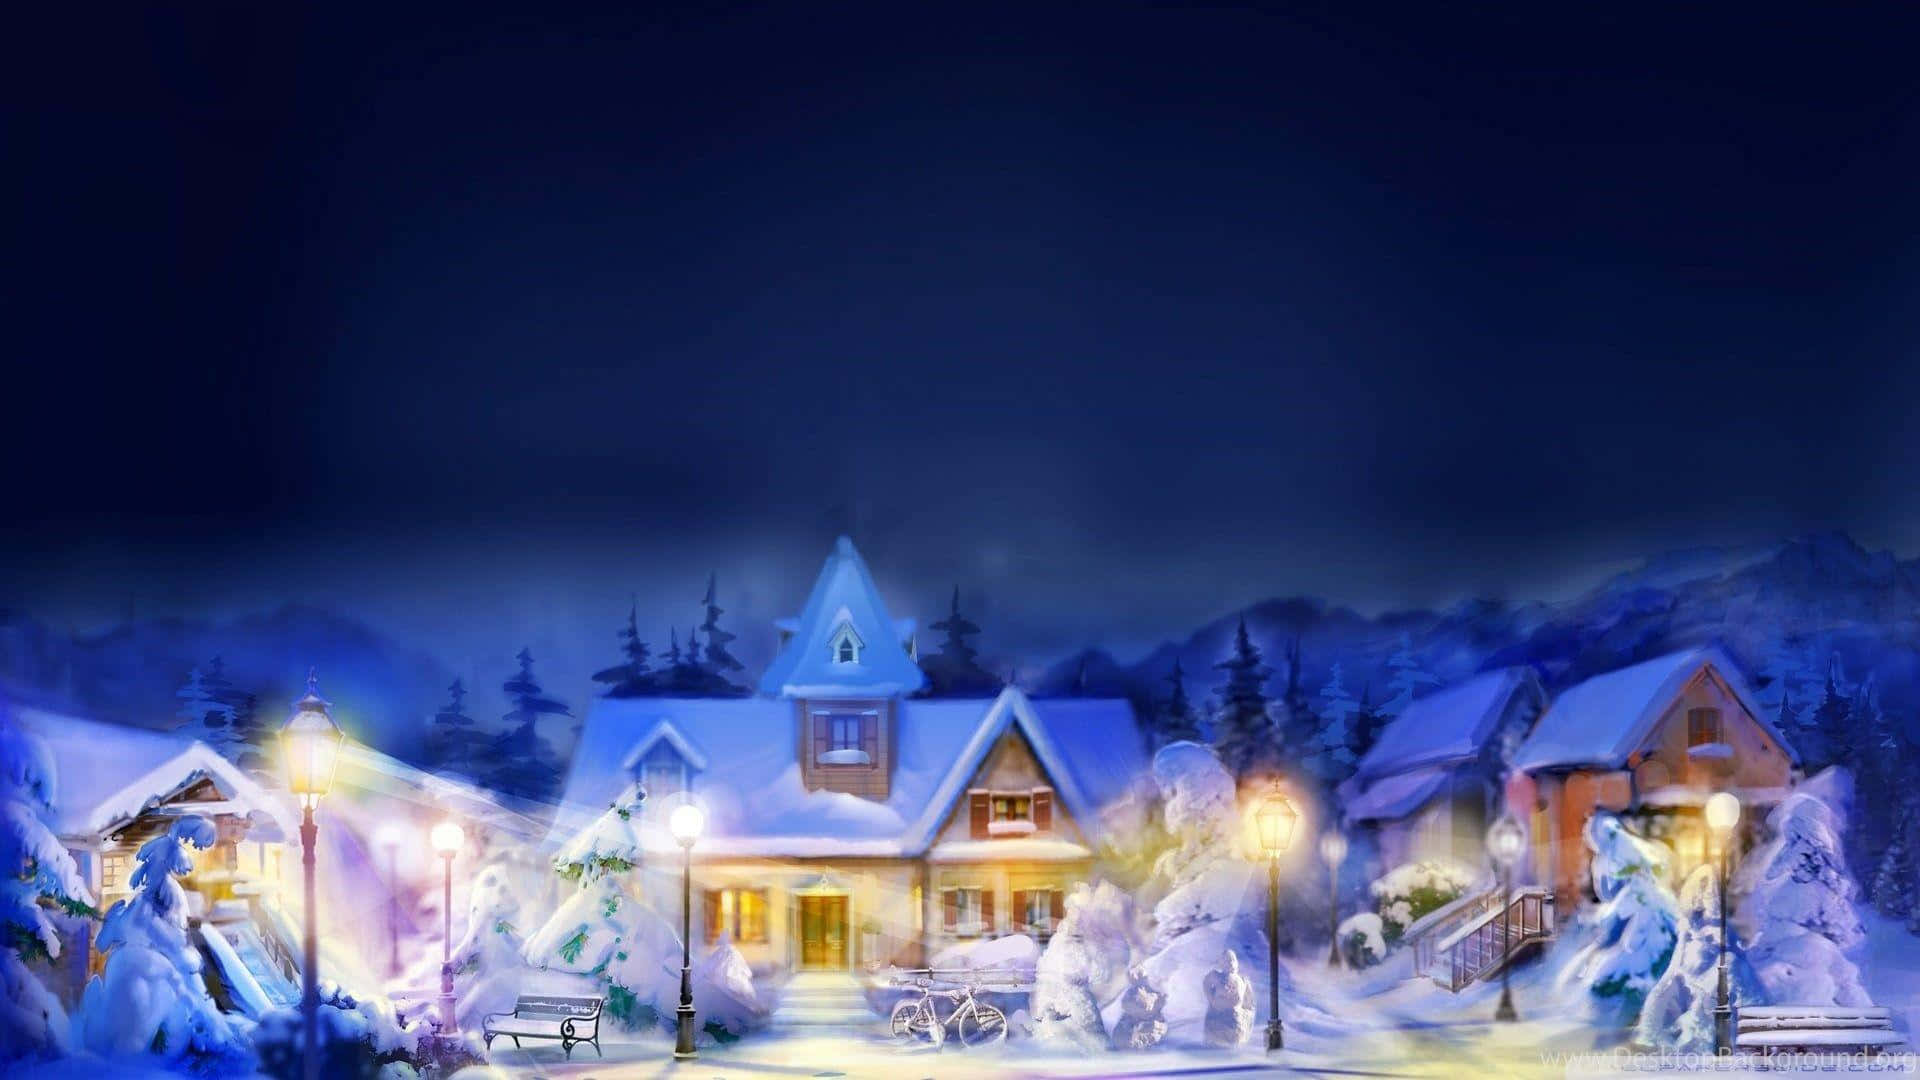 “A peaceful winter scene of a beautiful Christmas village.” Wallpaper